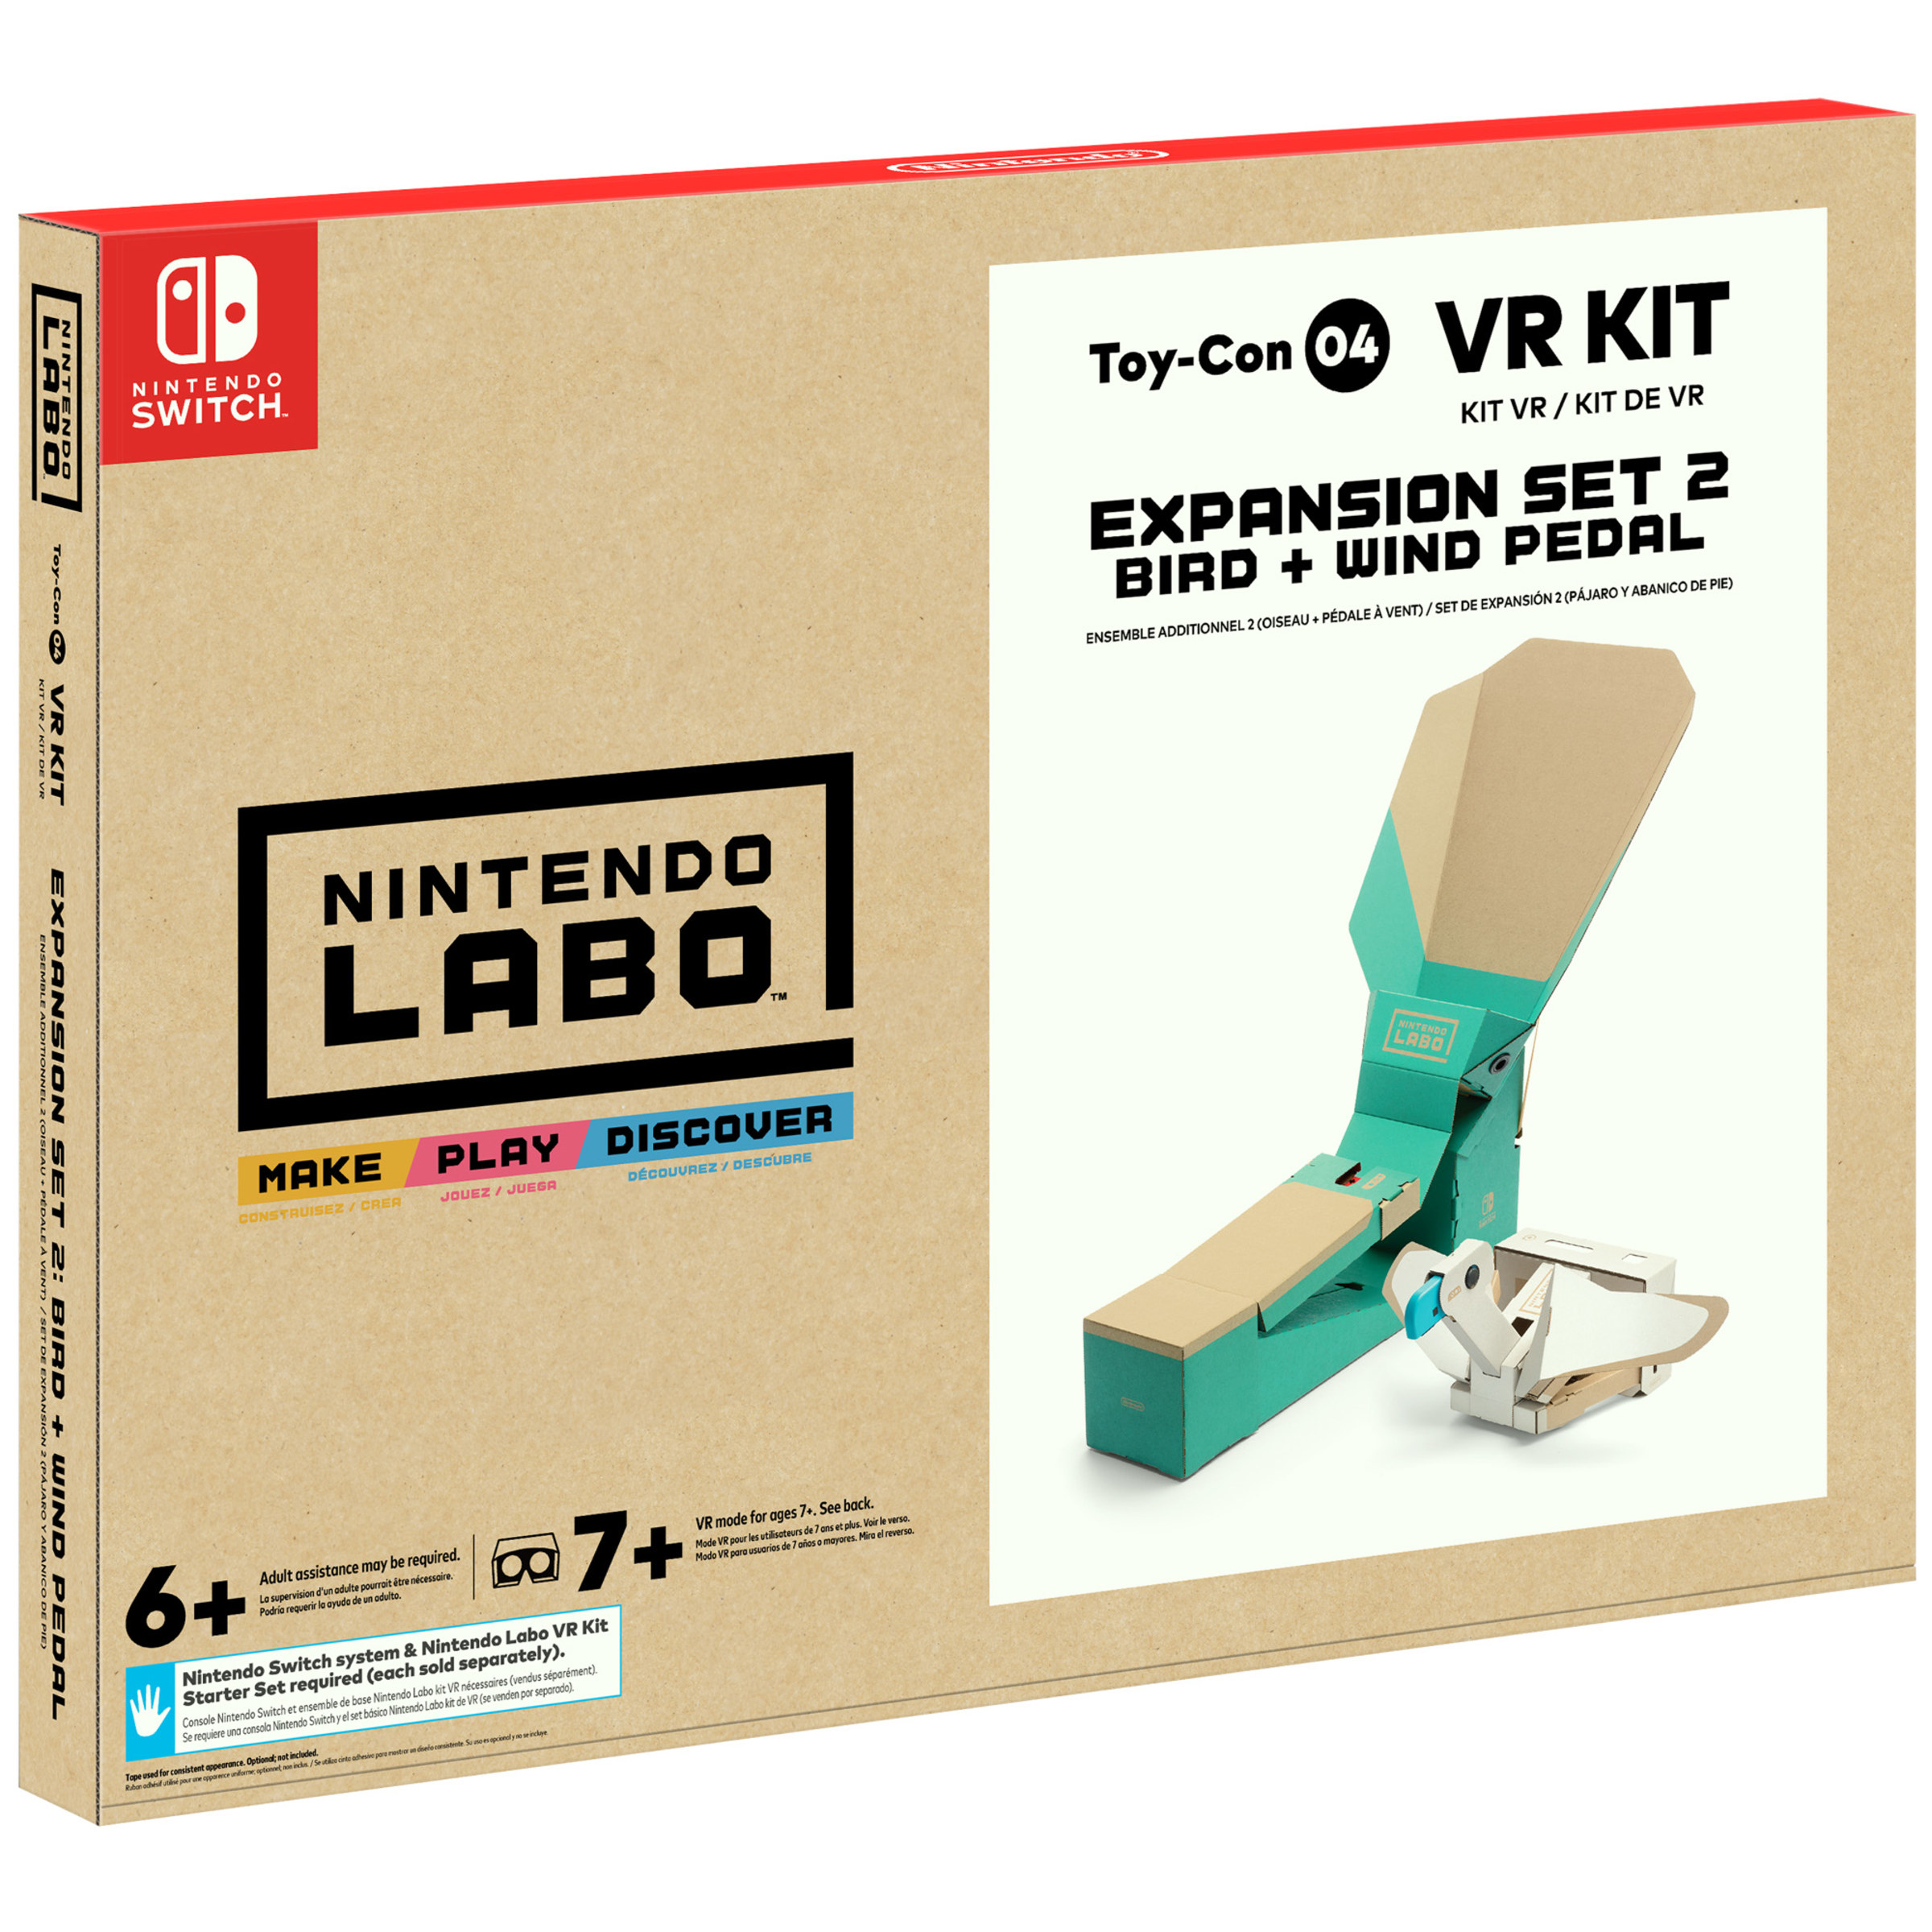 Nintendo Labo Toy-Con 04: VR Kit - Expansion Set 2 – Bird + Wind